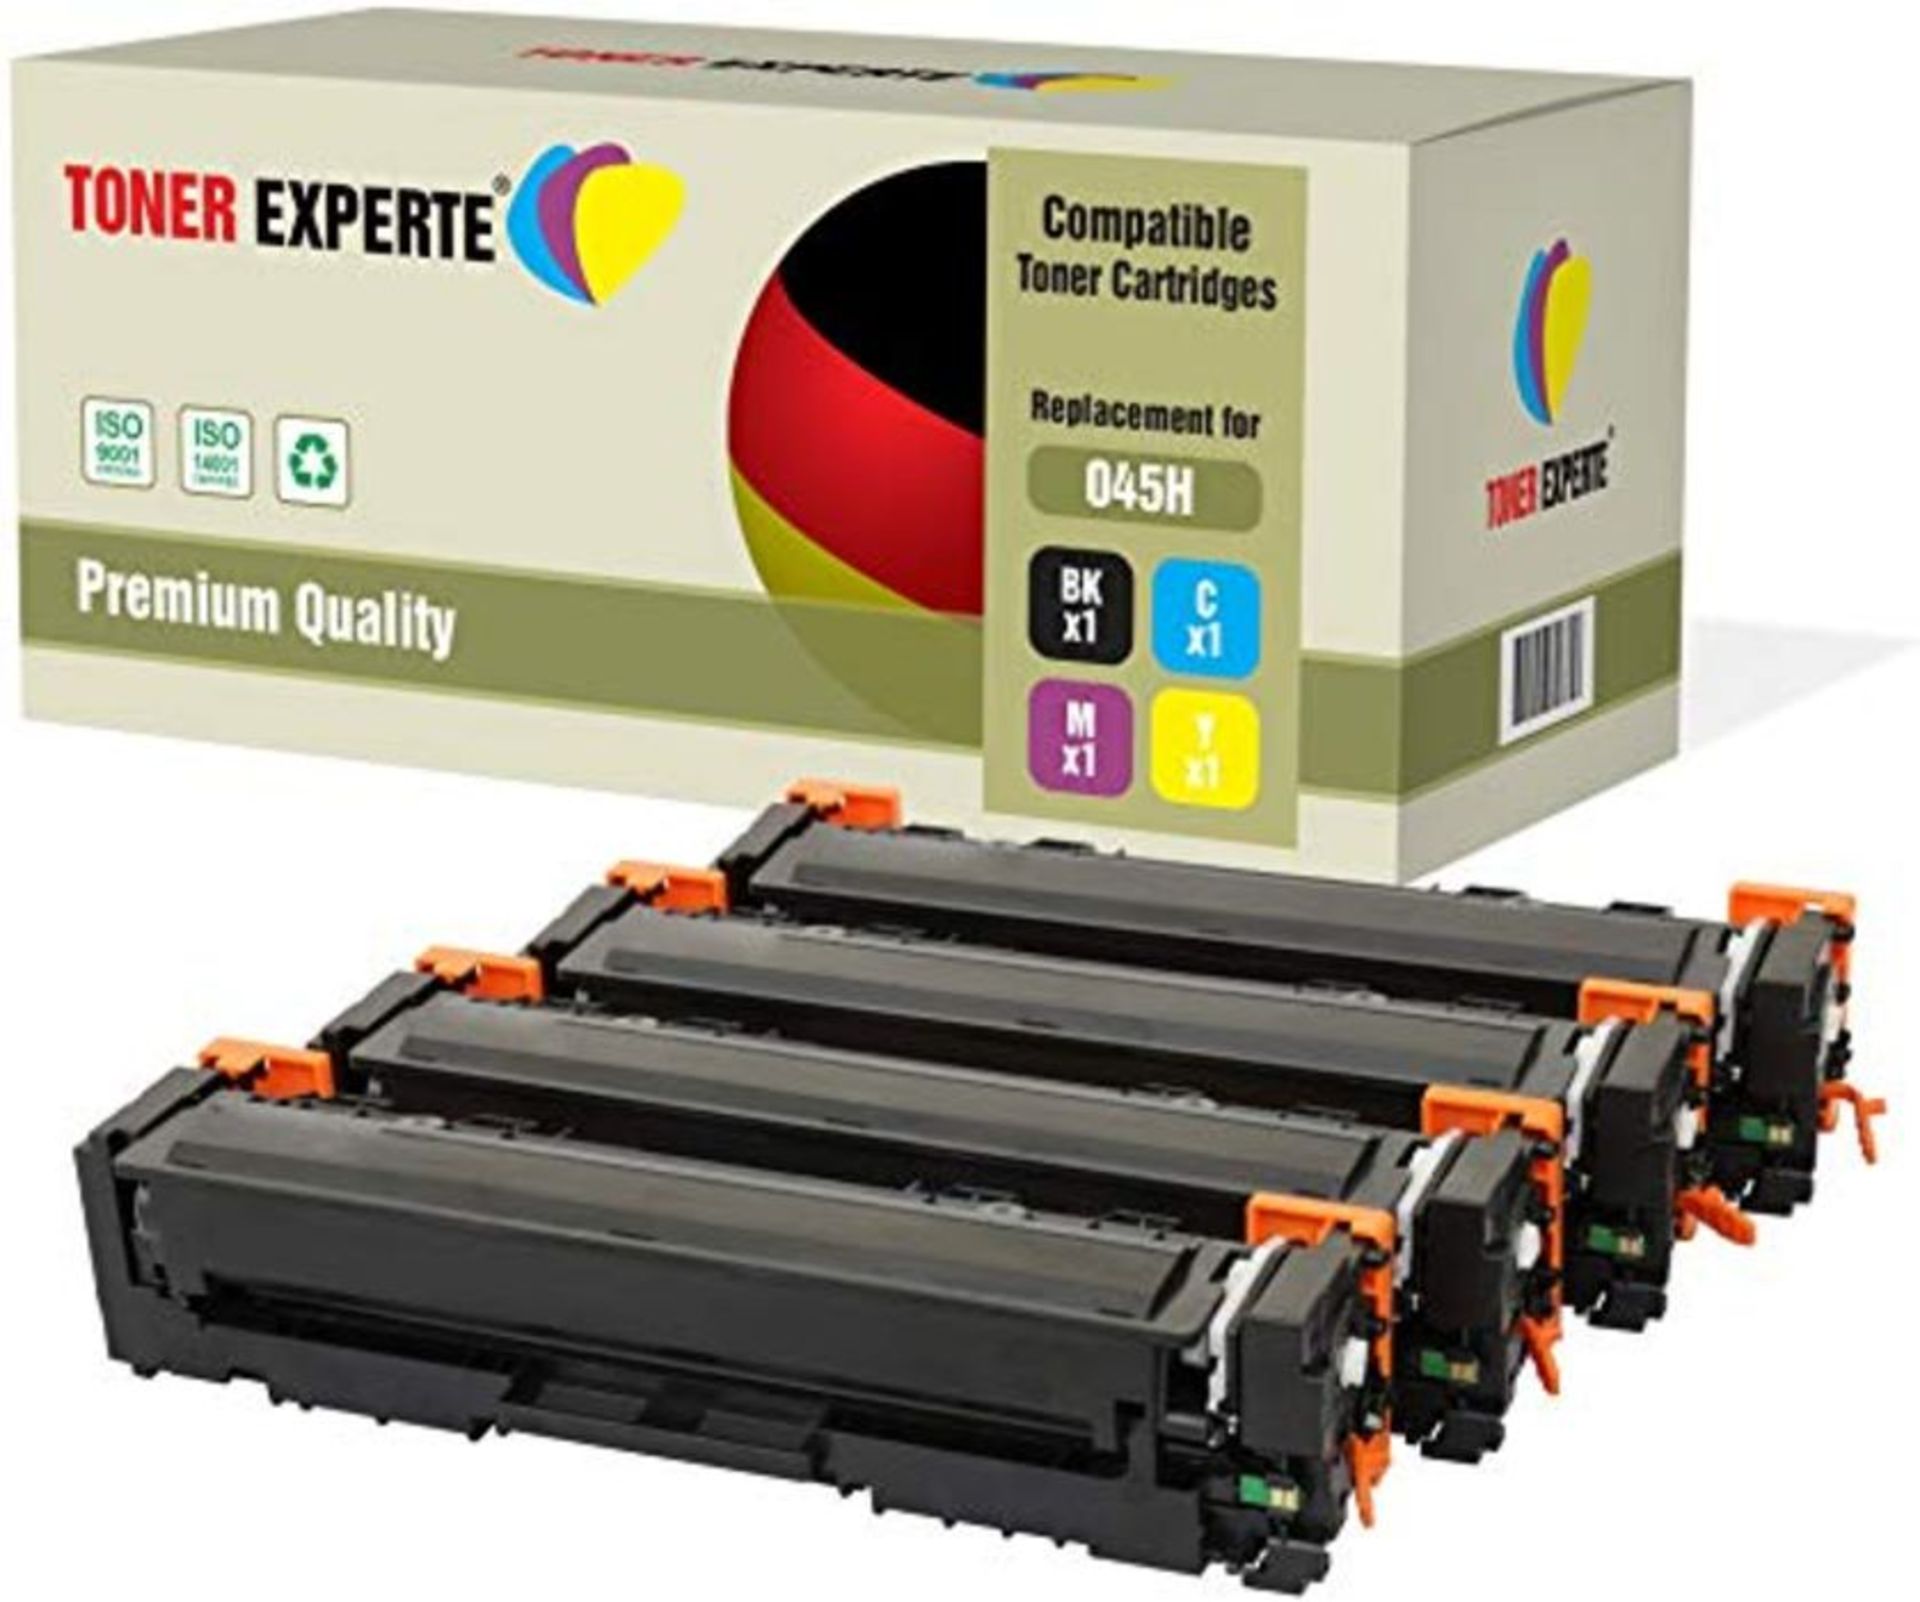 Set of 4 TONER EXPERTE® Compatible with 045H 045 Premium Toner Cartridges for i-SENSY